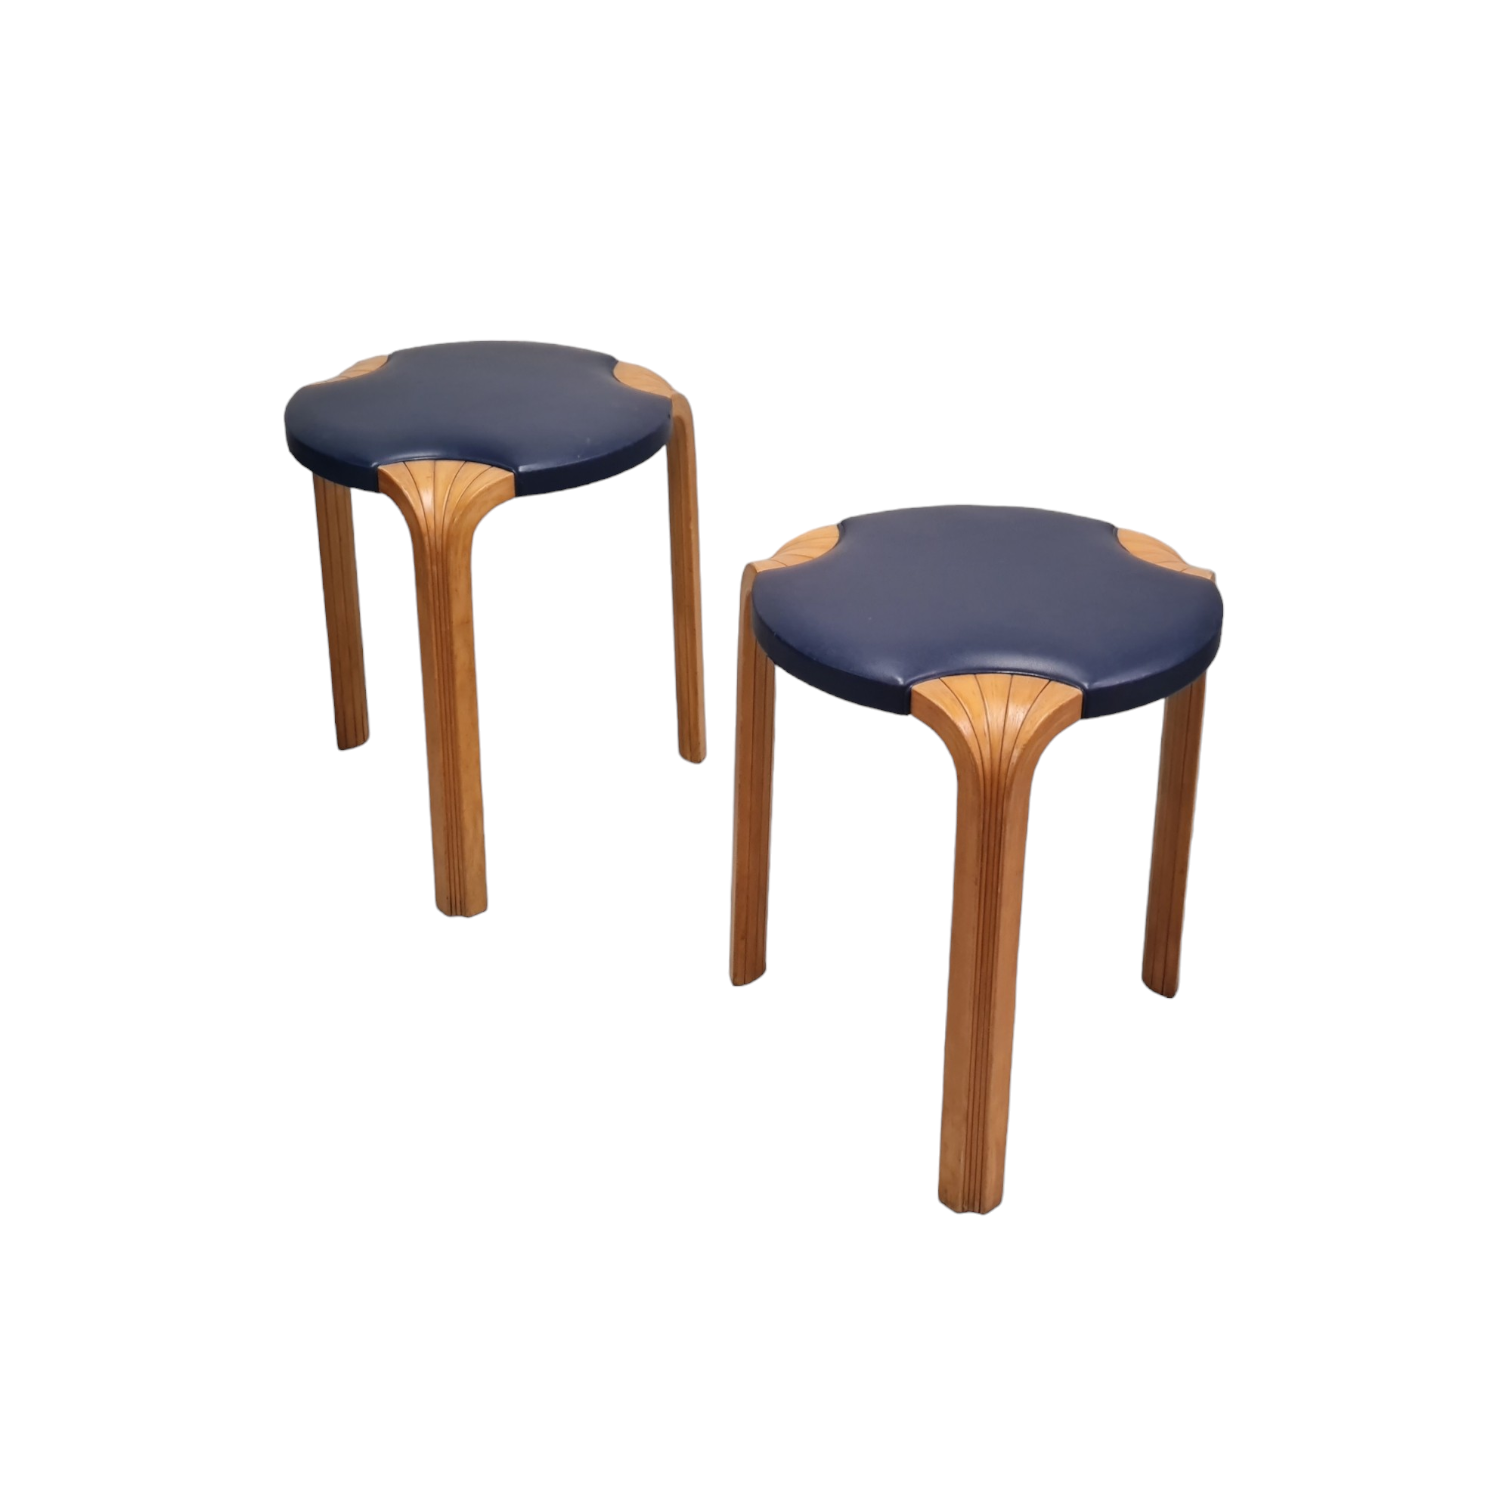 Alvar Aalto: X600 stool